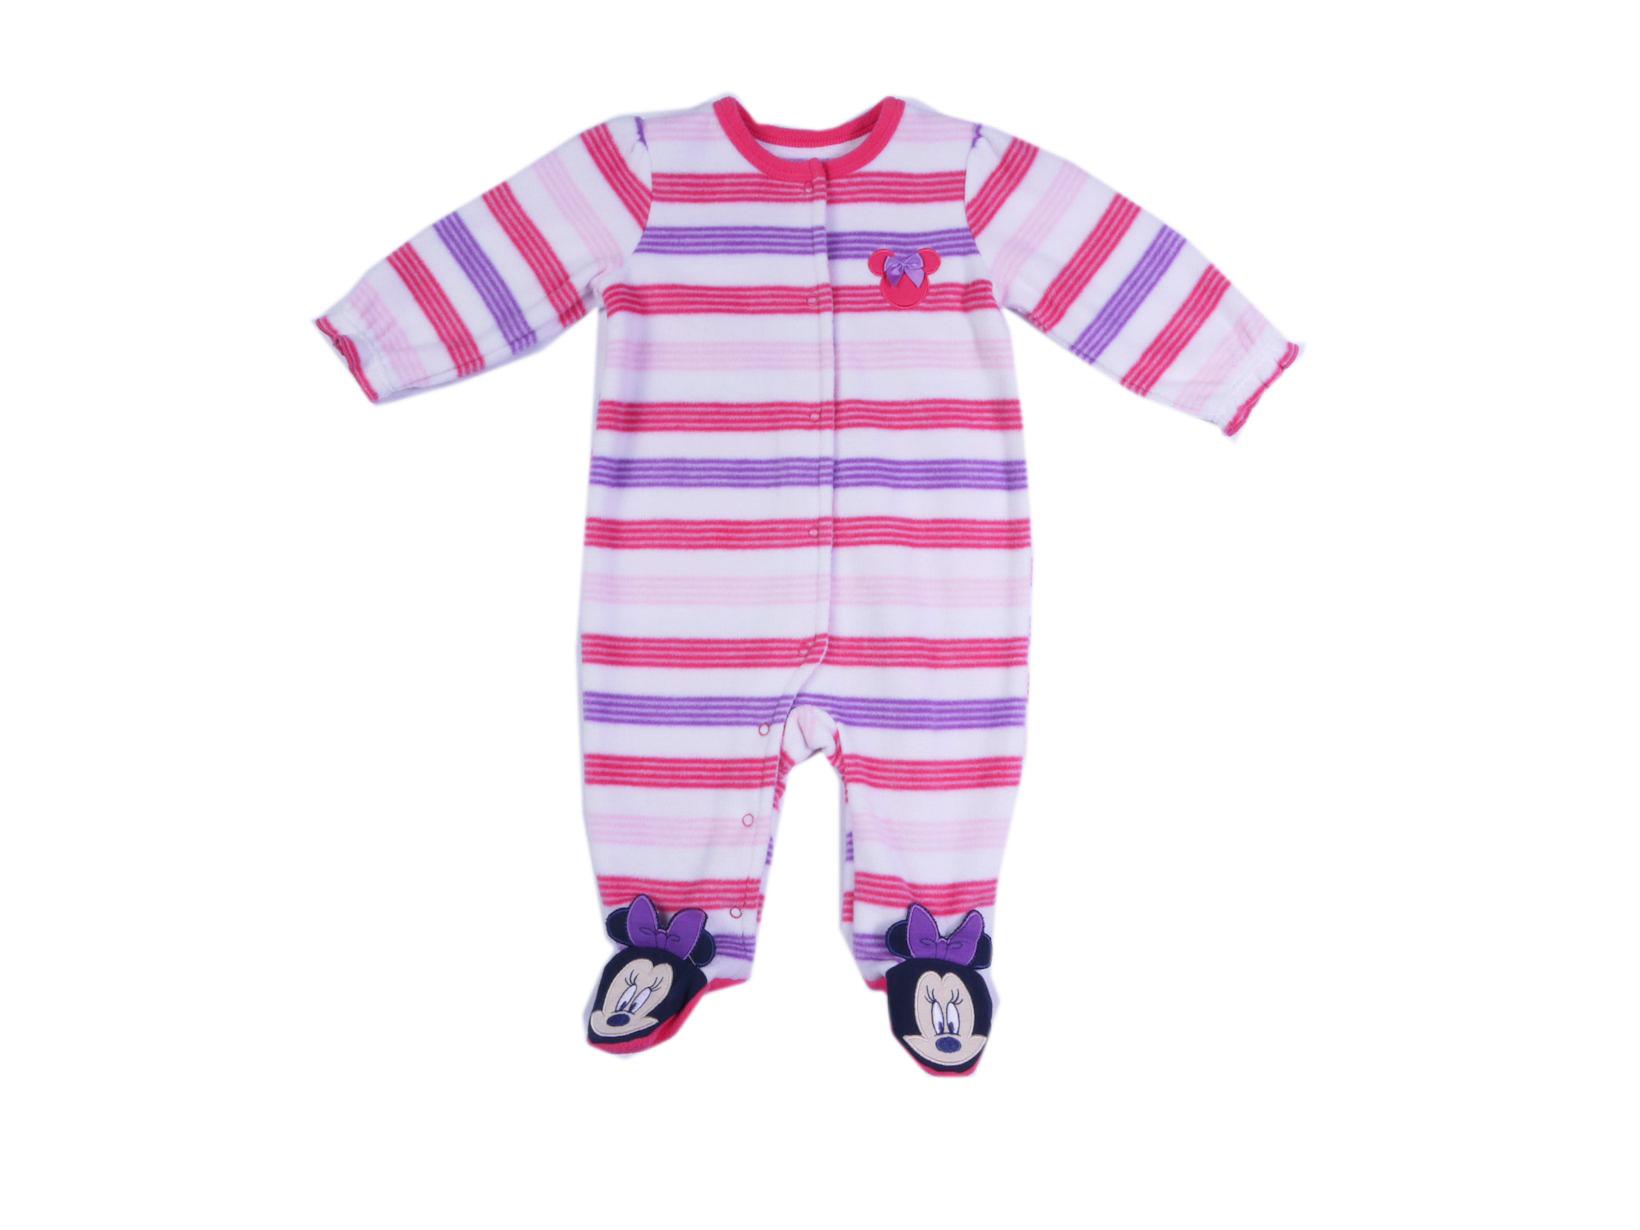 Disney Newborn & Infant Girl's Footed Sleeper Pajamas - Minnie Mouse